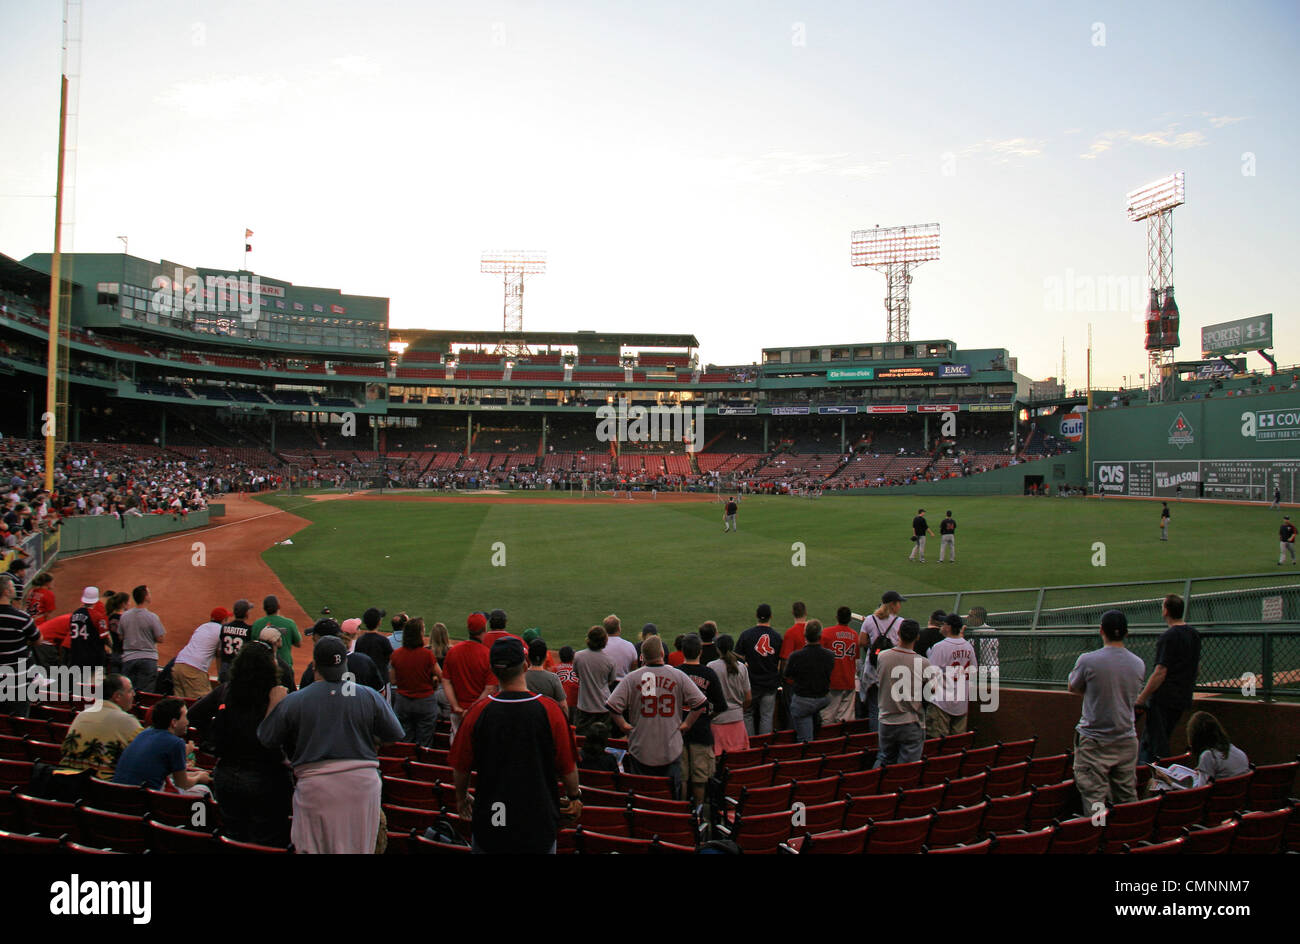 Fenway Park, home of the Boston Red Sox Major League Baseball team in Boston, Massachusetts, United States. Stock Photo